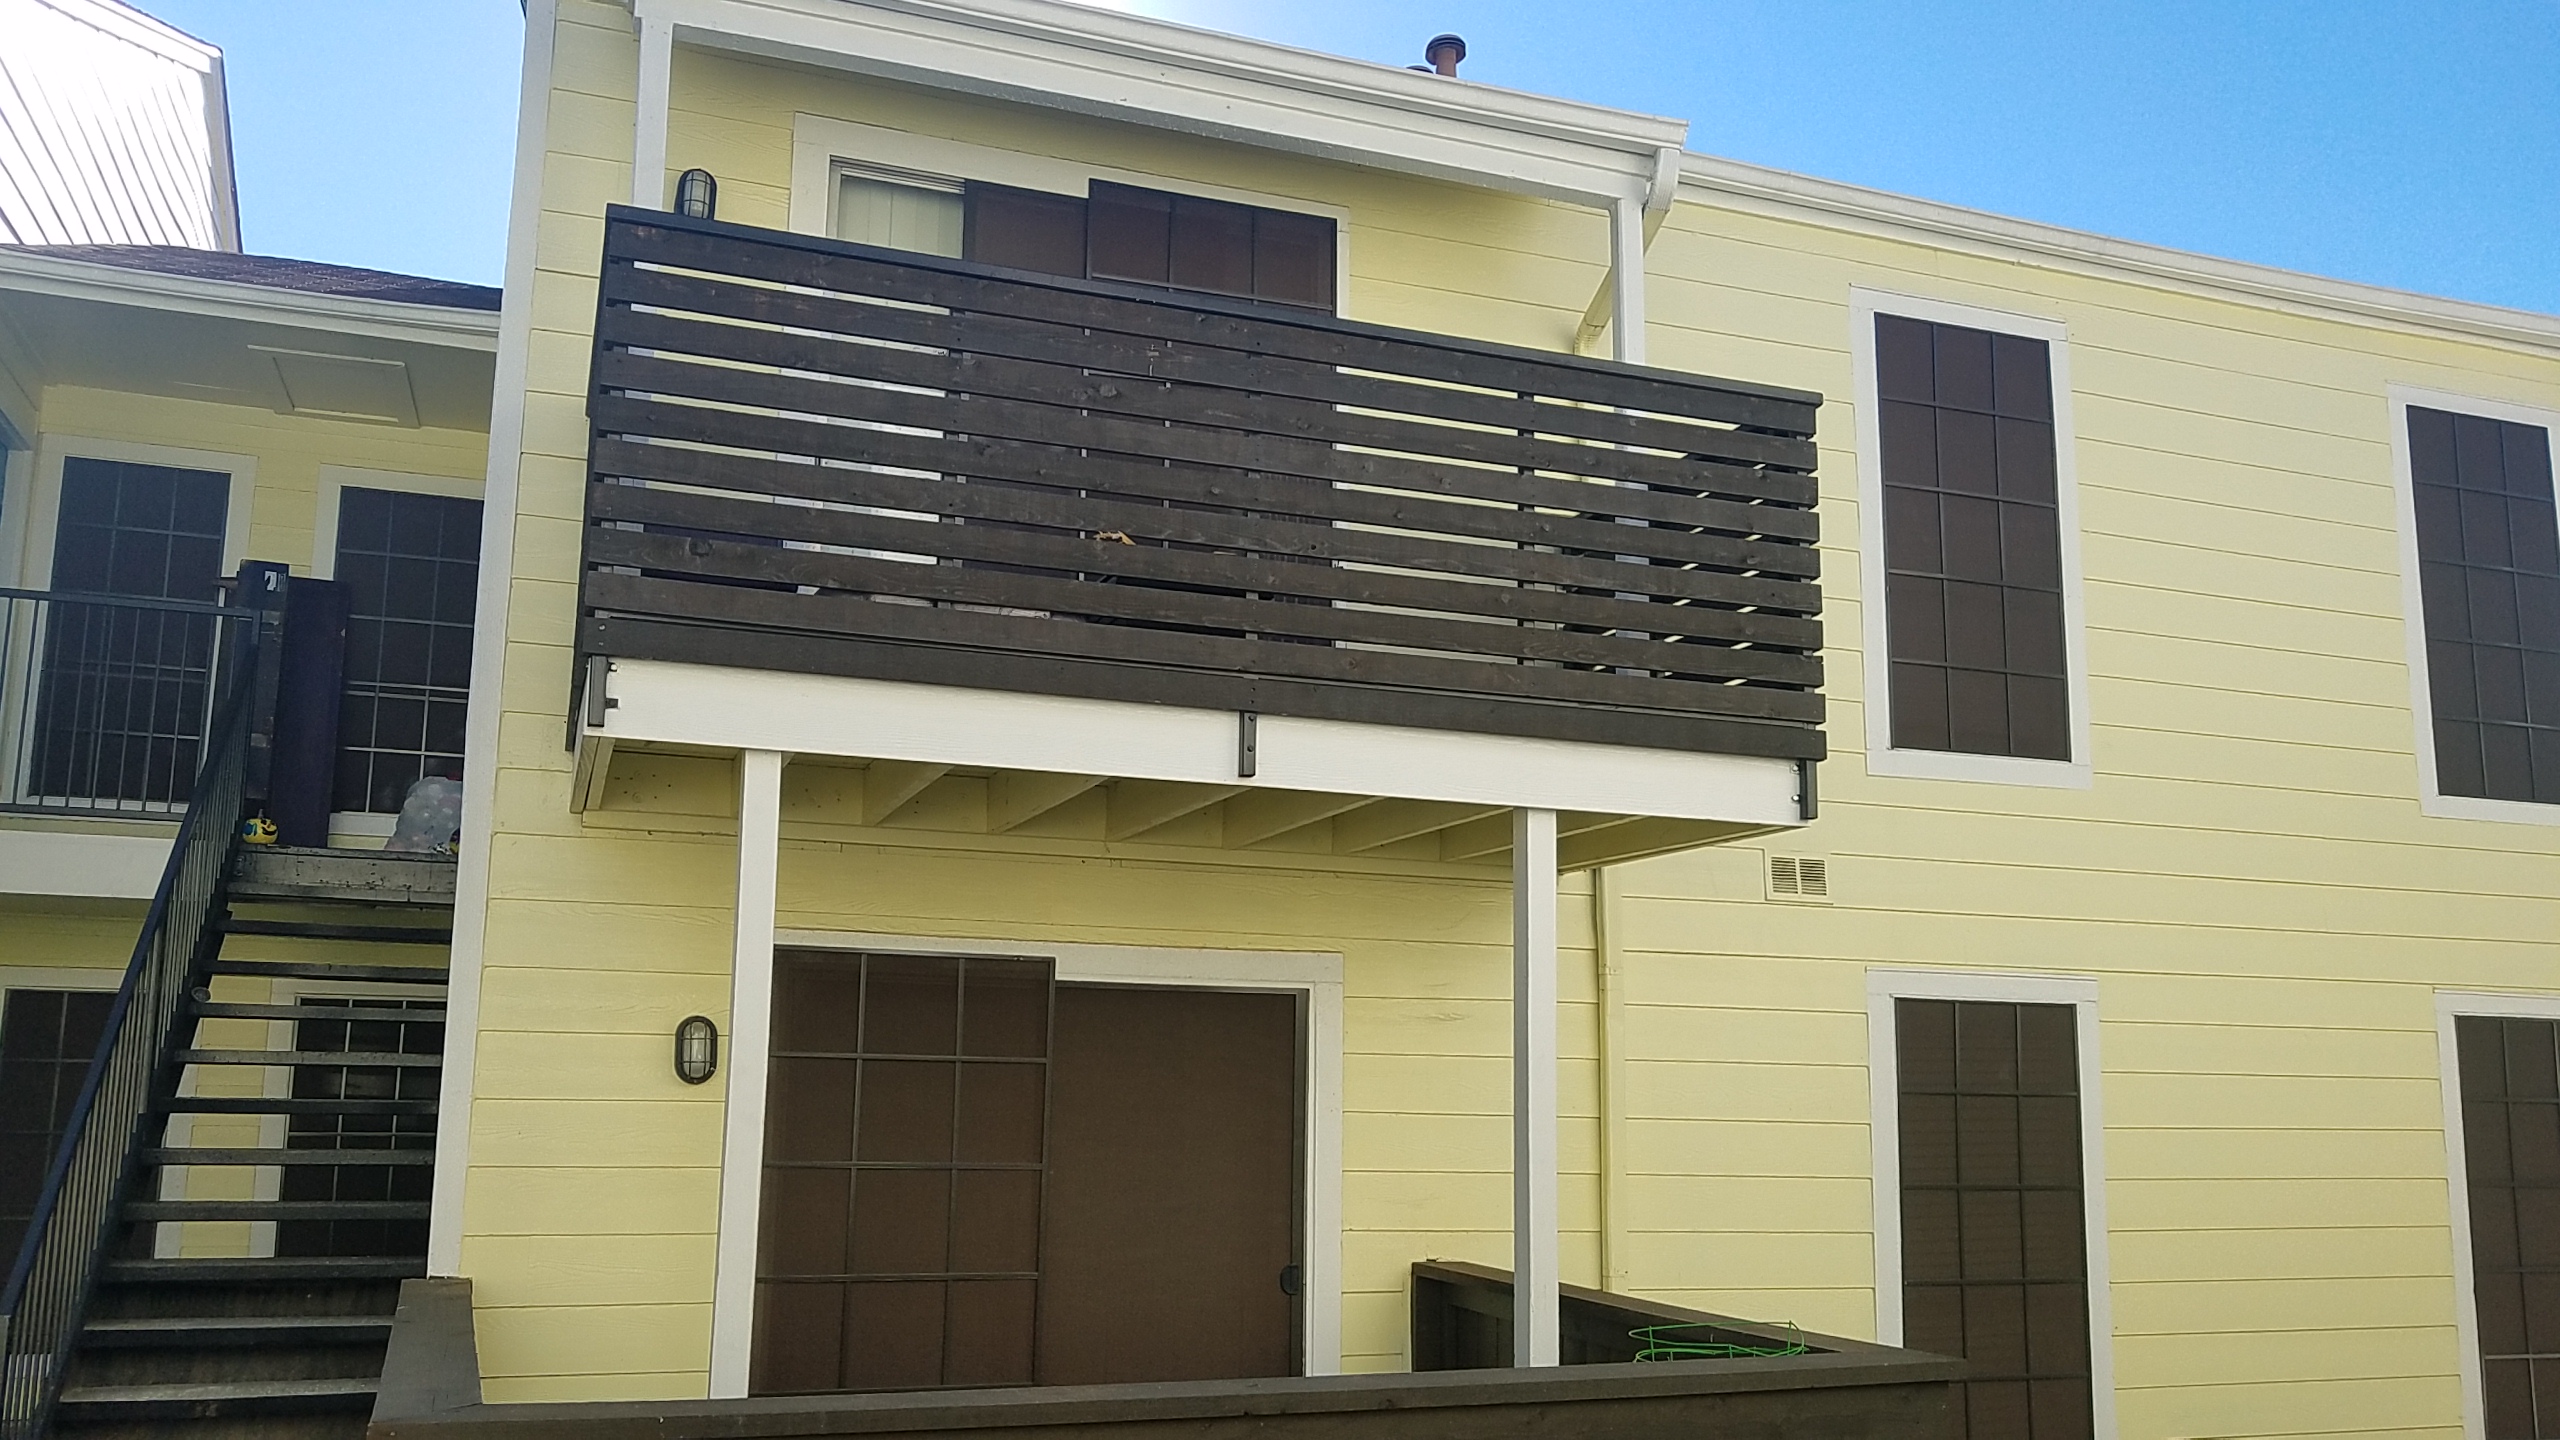 90% mocha solar screens w/ grids for apartments